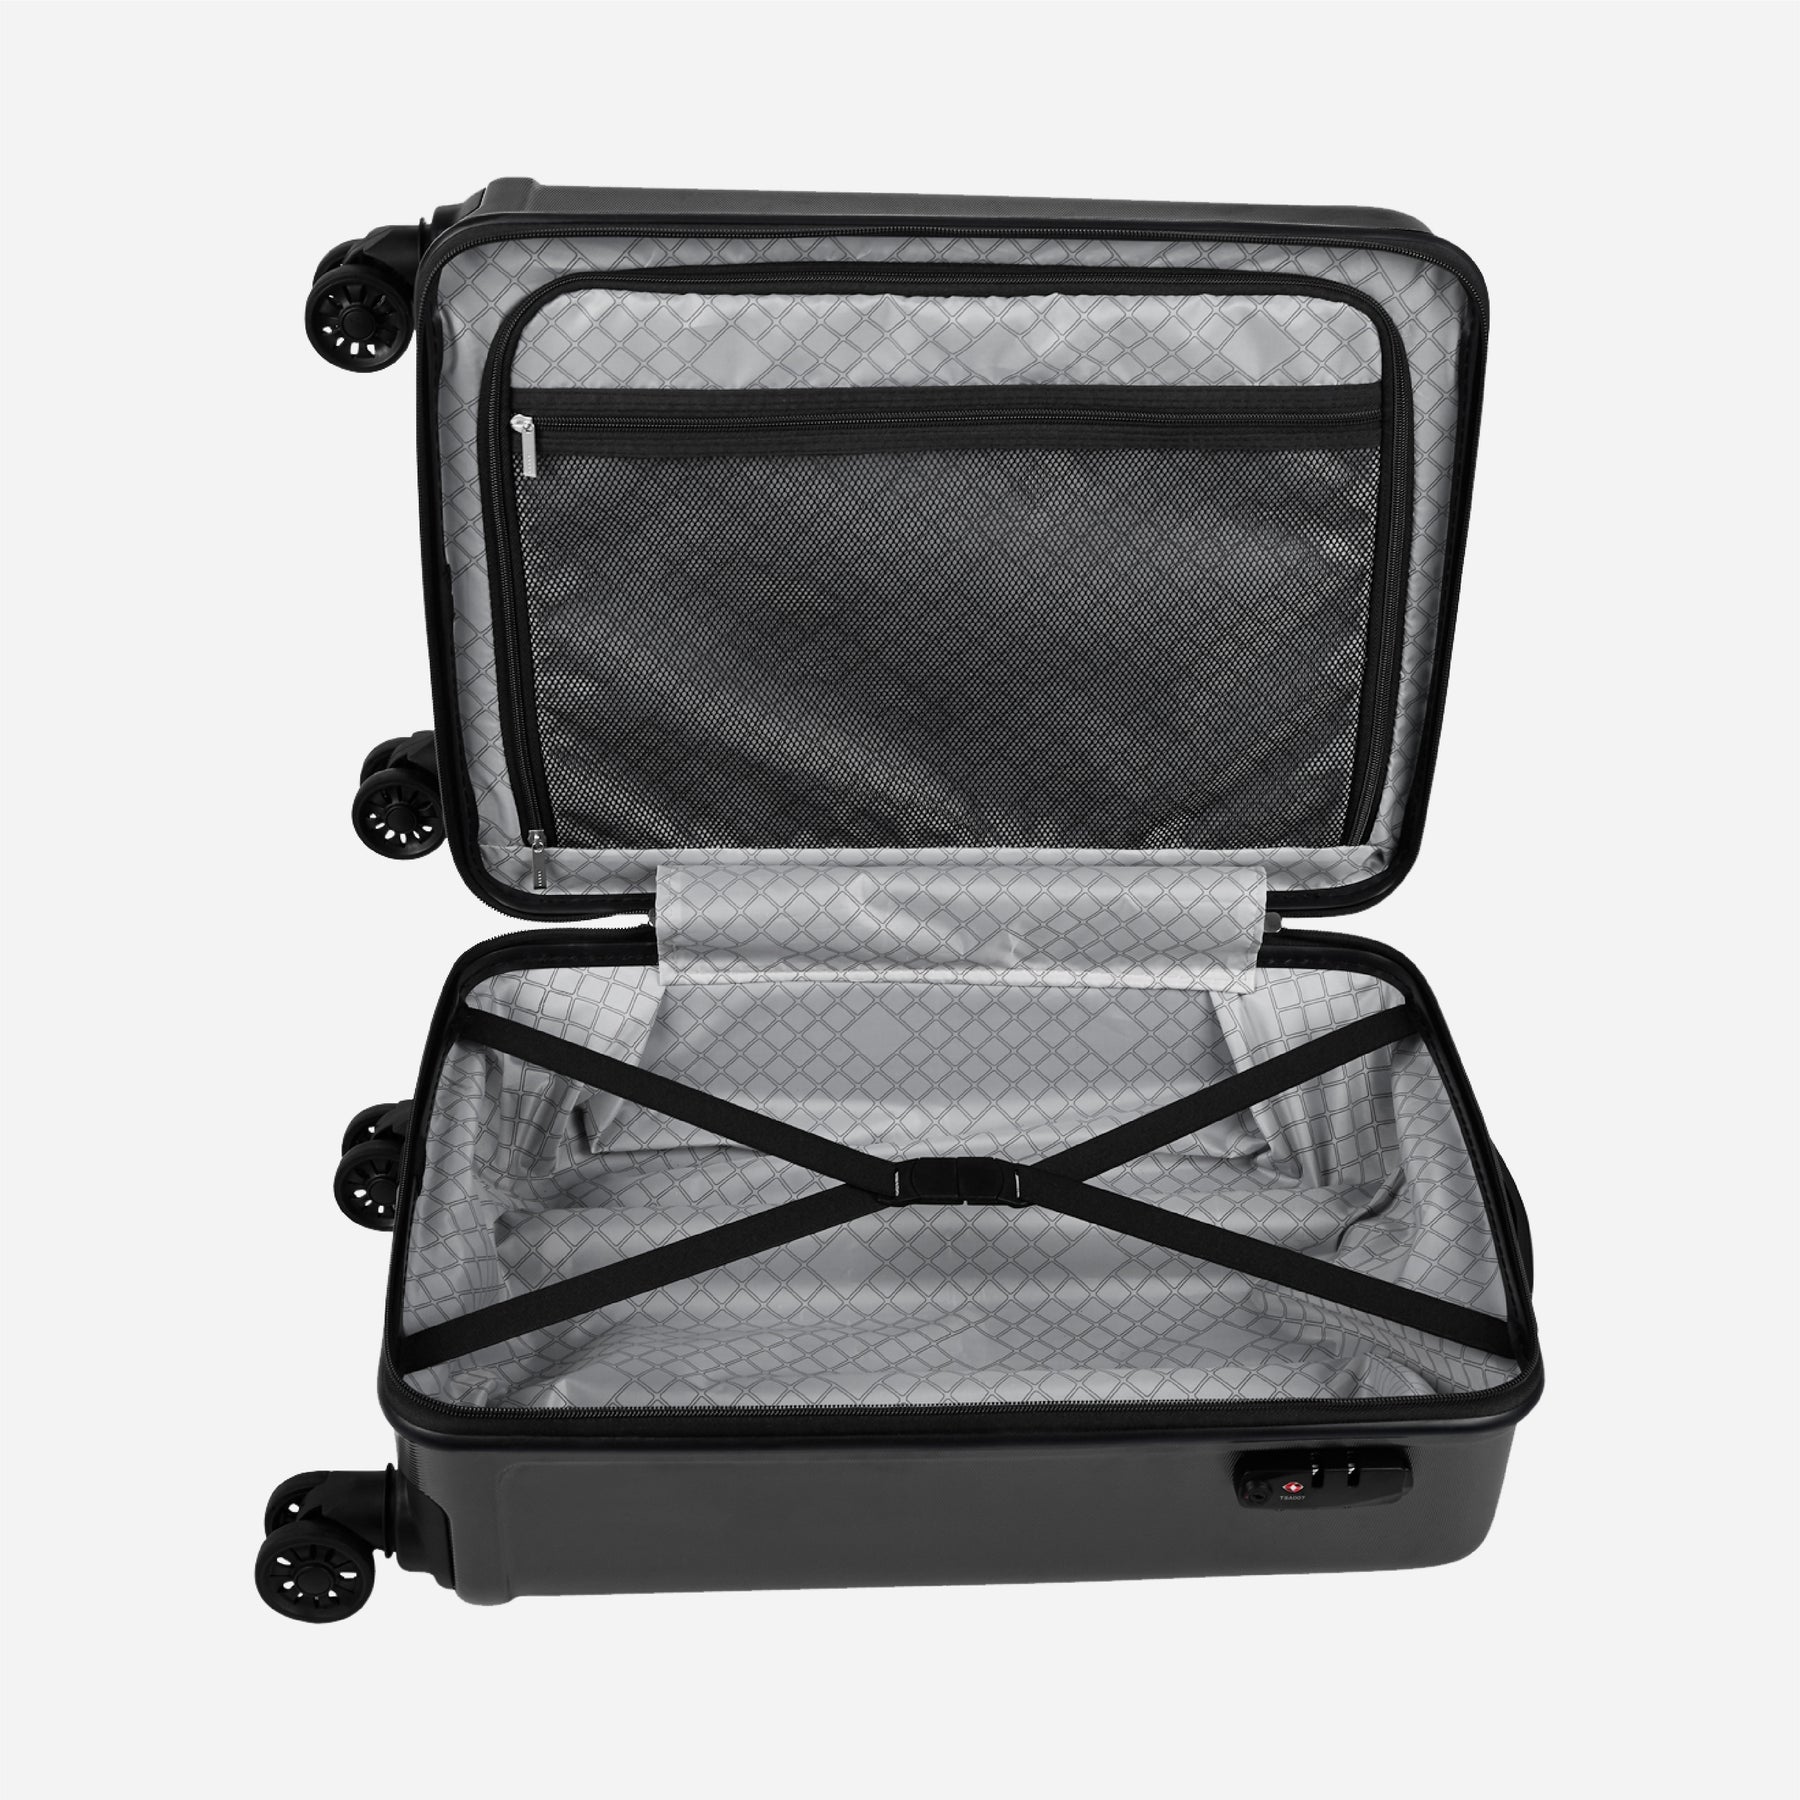 Safari Ryder Gun Metal Trolley Bag With TSA Lock and Dual Wheels